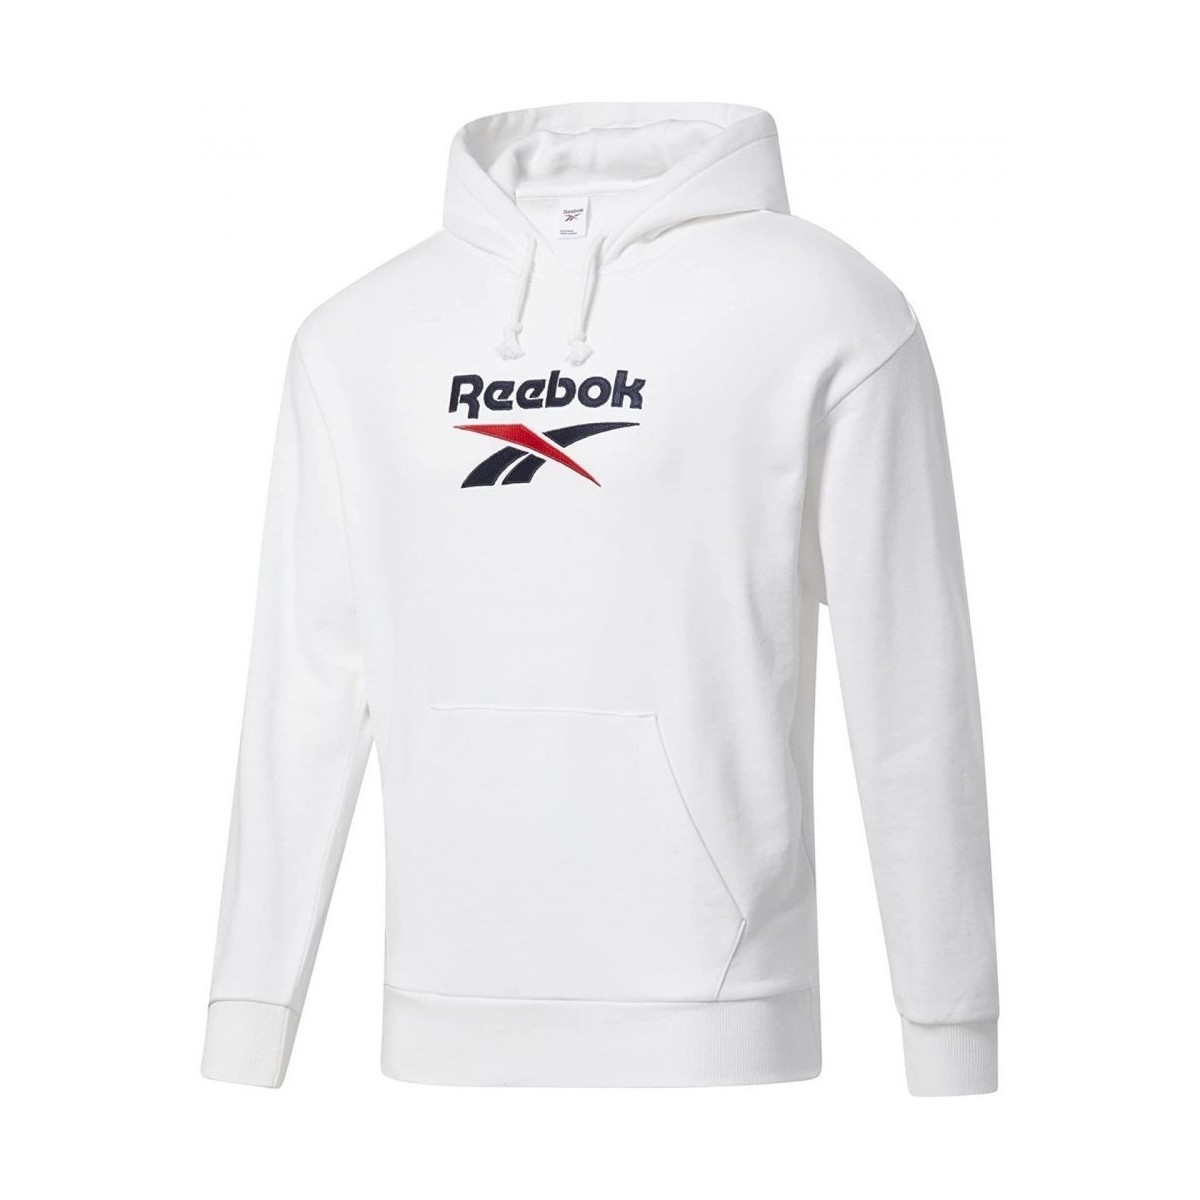 Textiel Sweaters / Sweatshirts Reebok Sport Cl F Vector Hoodie Wit